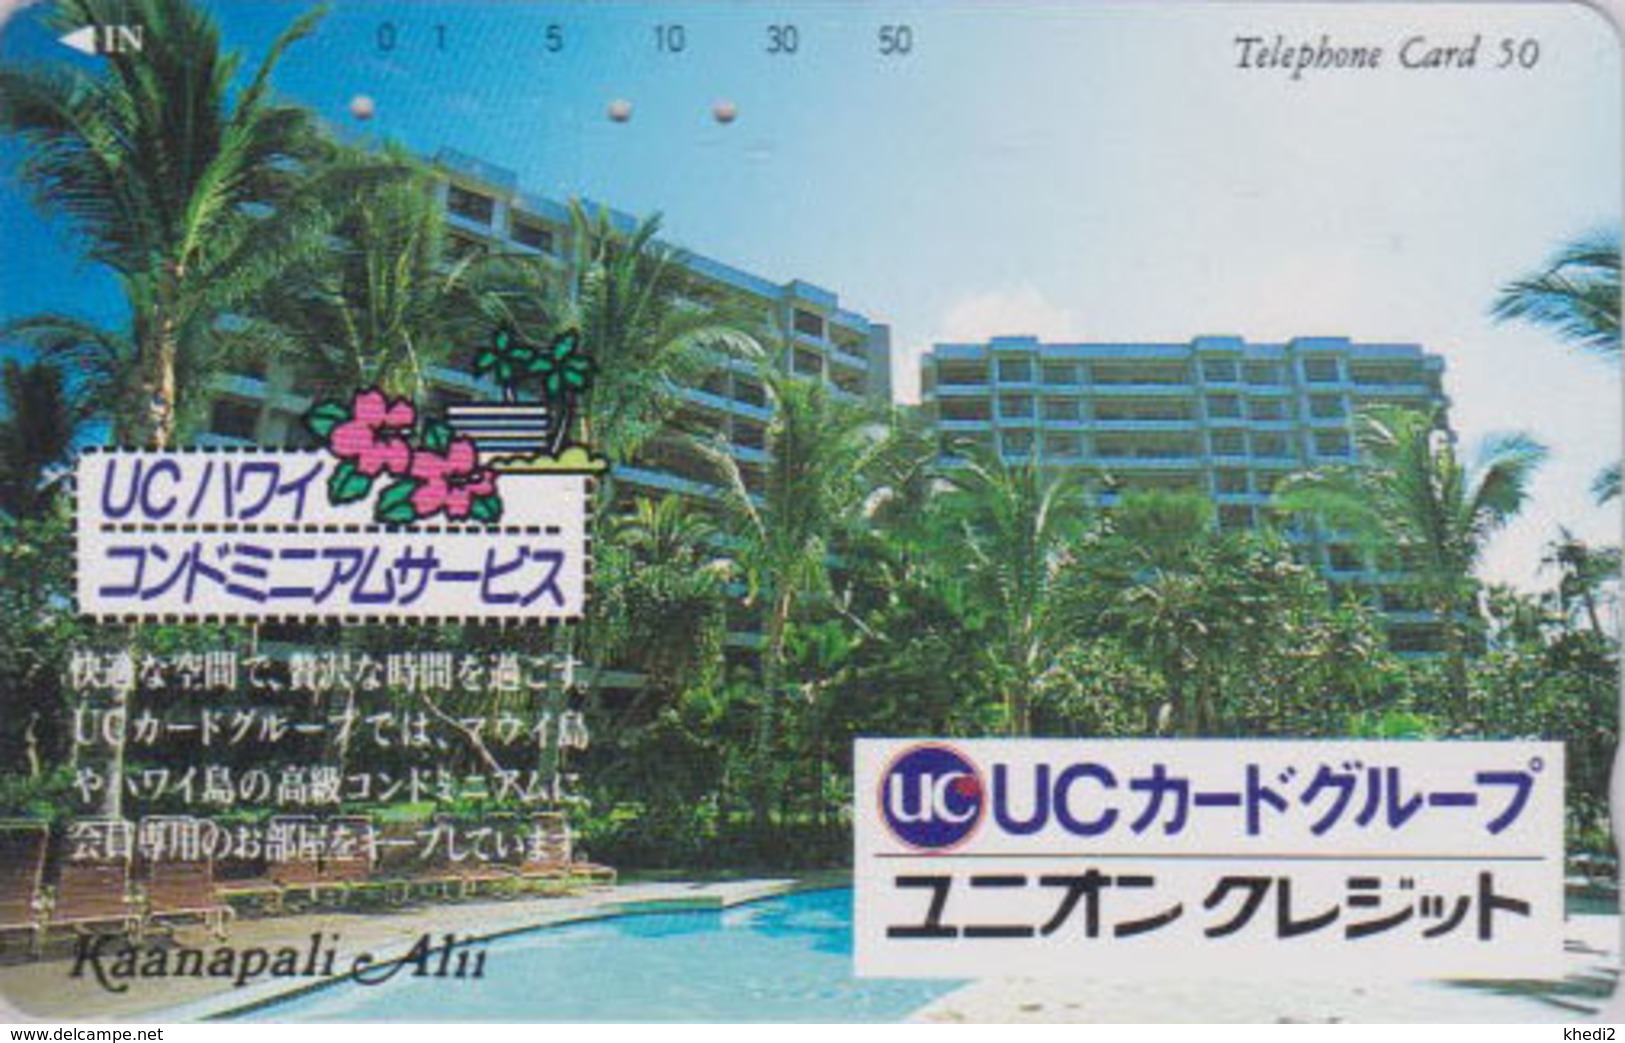 Télécarte Japon / 110-117617 - HAWAII - KAANAPALI - UC BANK CREDIT CARD / Modèle 2 - Japan Phonecard - Site USA 460 - Francobolli & Monete